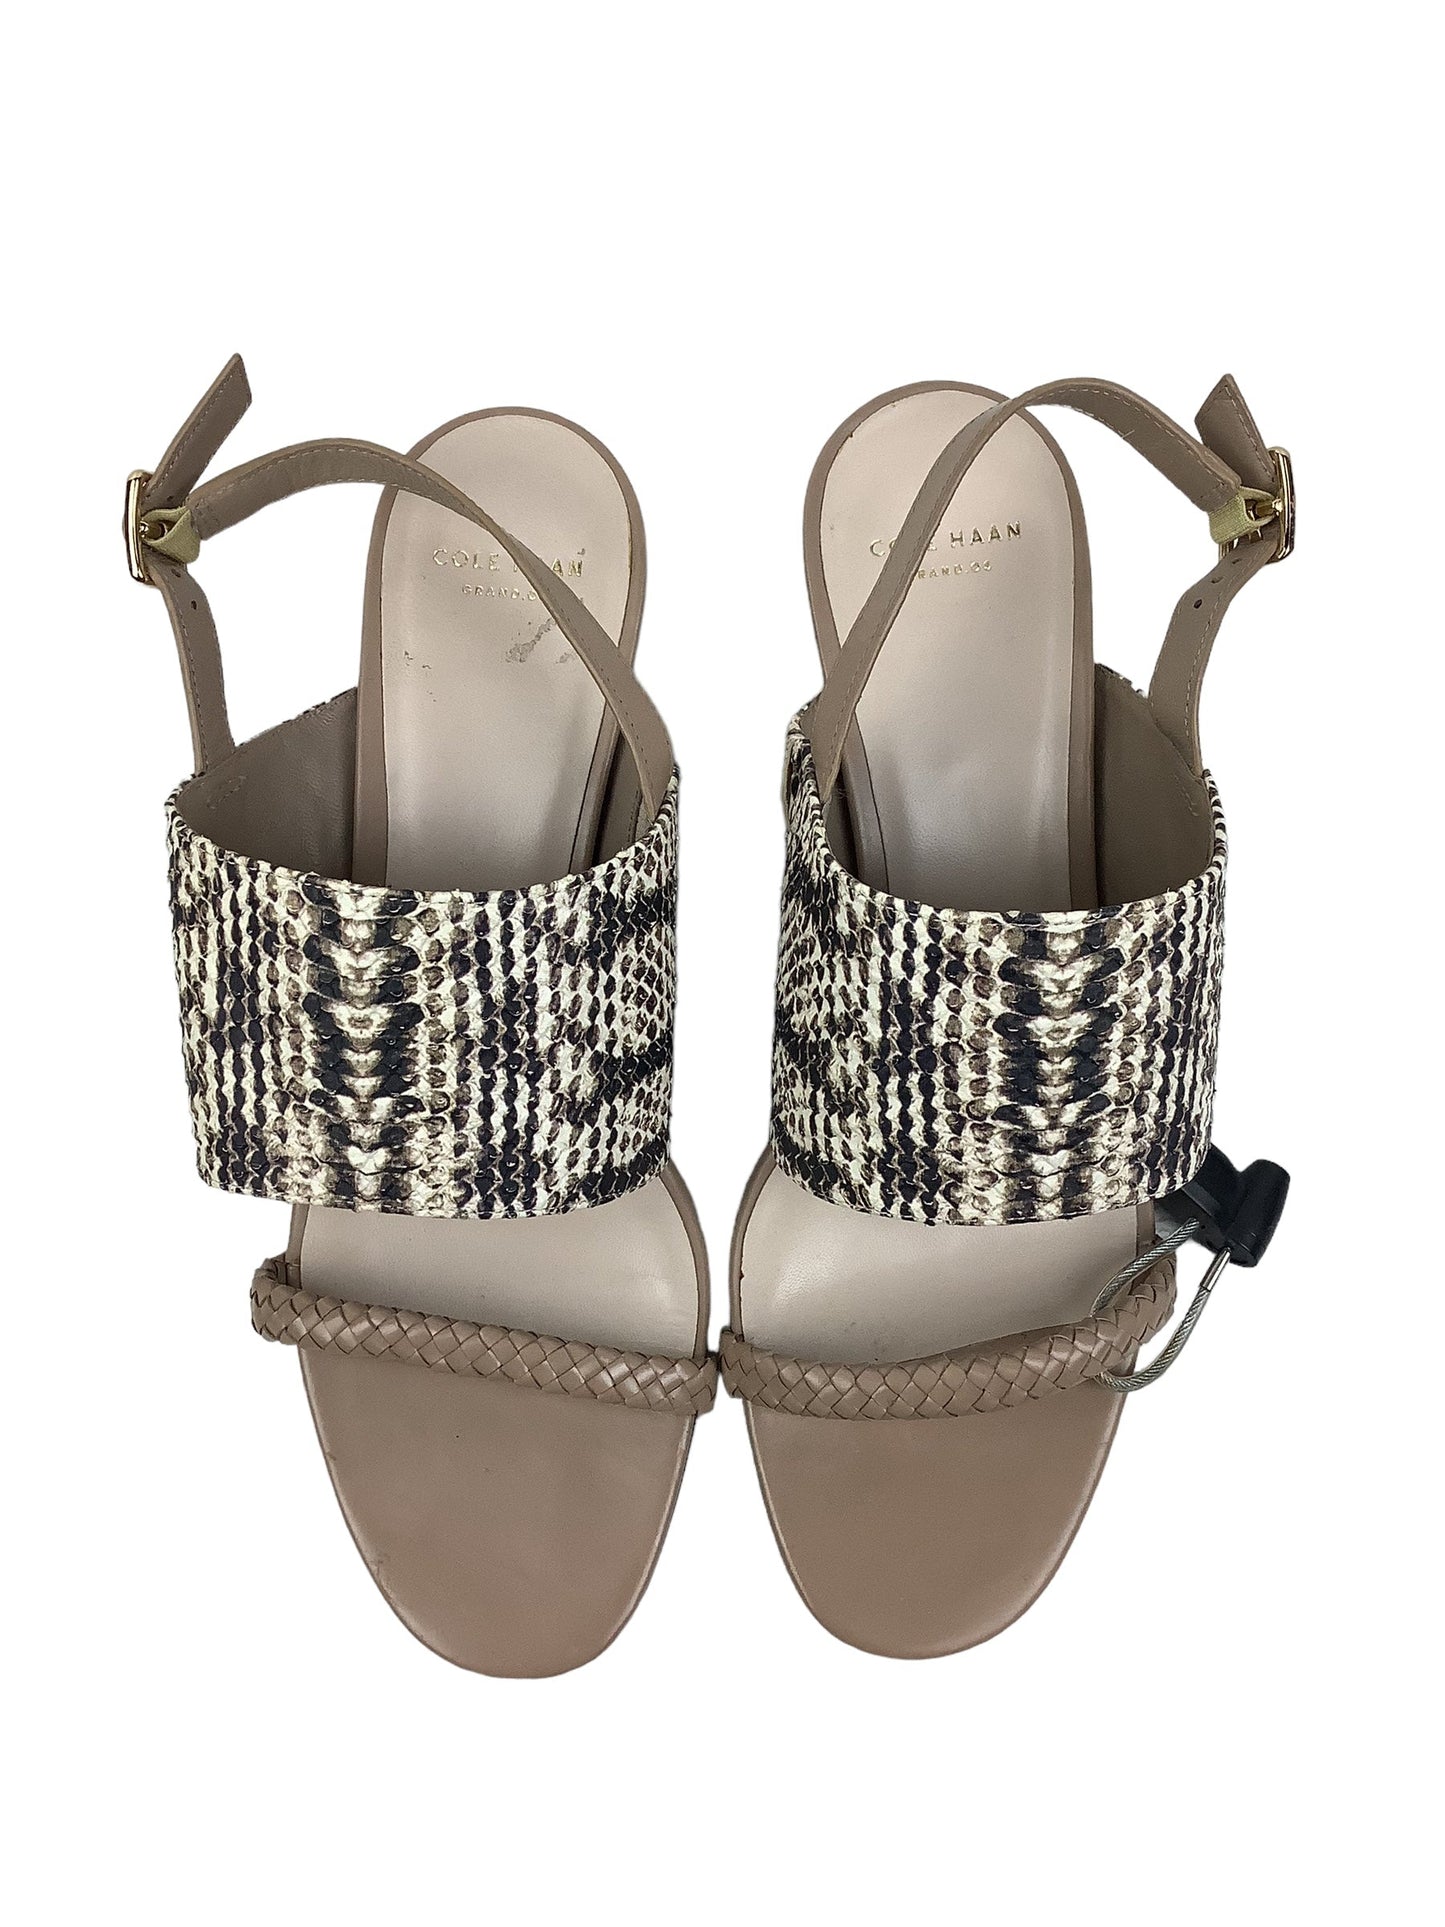 Sandals Designer By Cole-haan  Size: 7.5